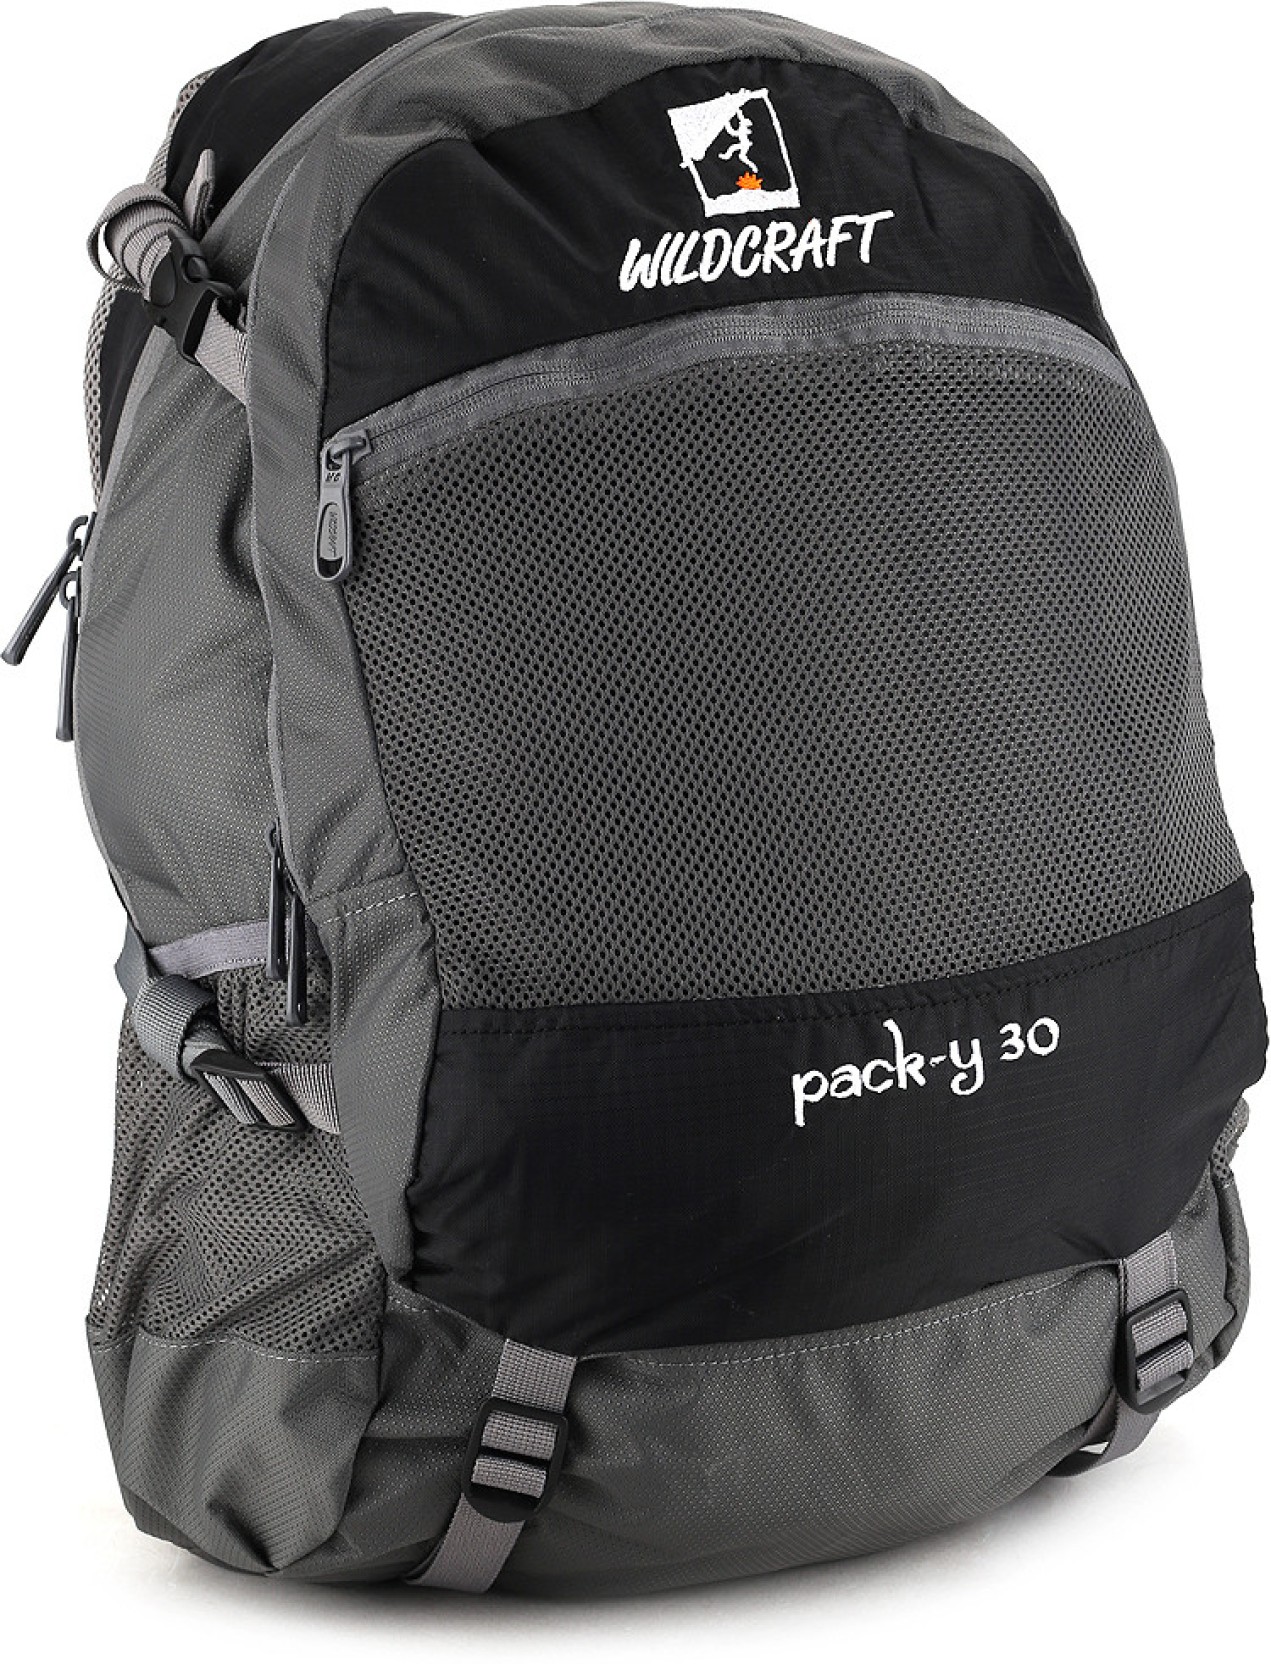 Wildcraft Pack Y 28 L Backpack Black - Price in India | 0